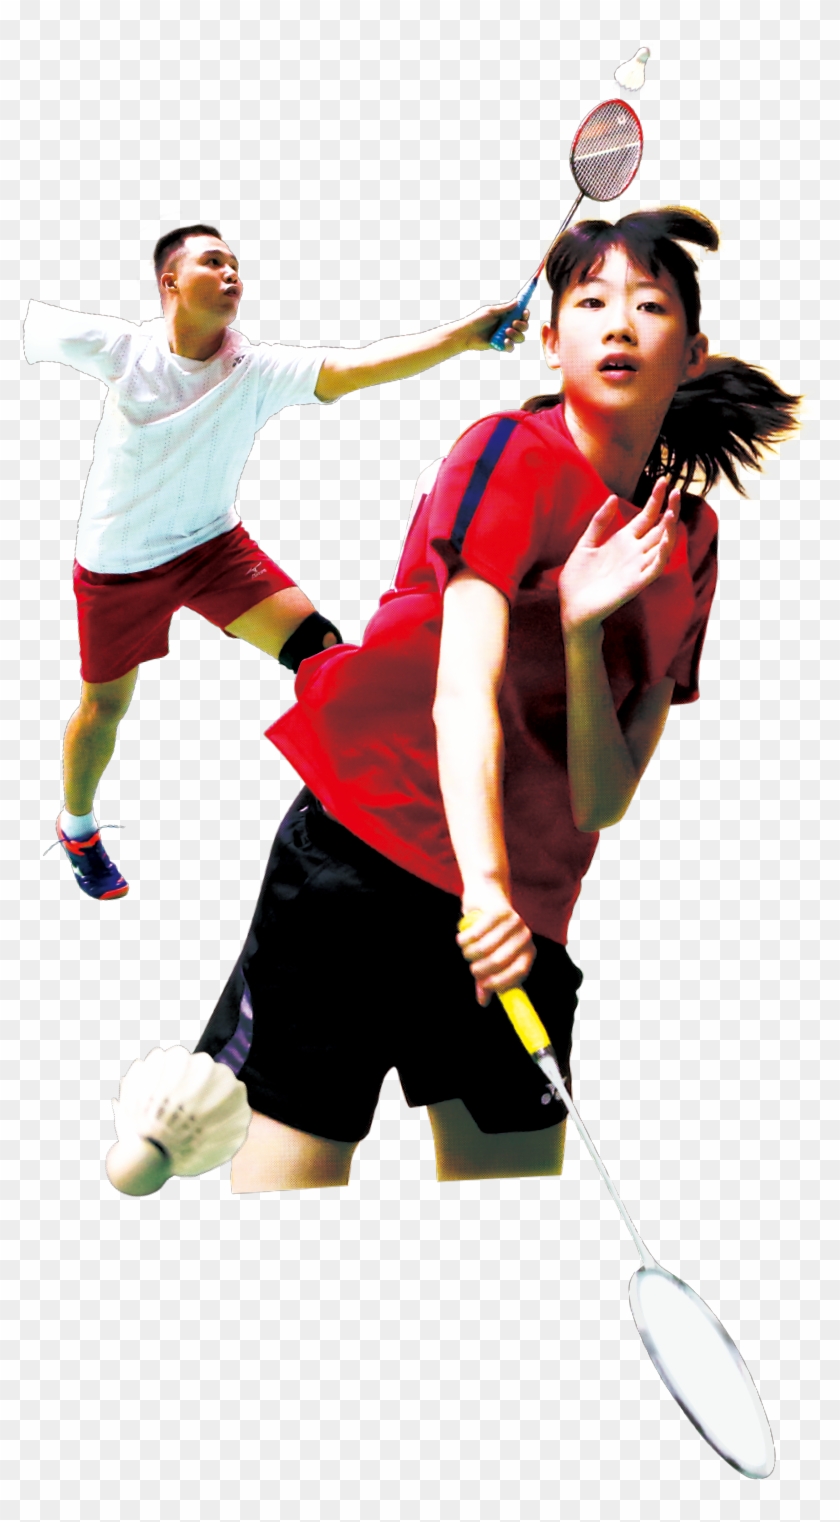 Badminton - Team Clipart #1633229